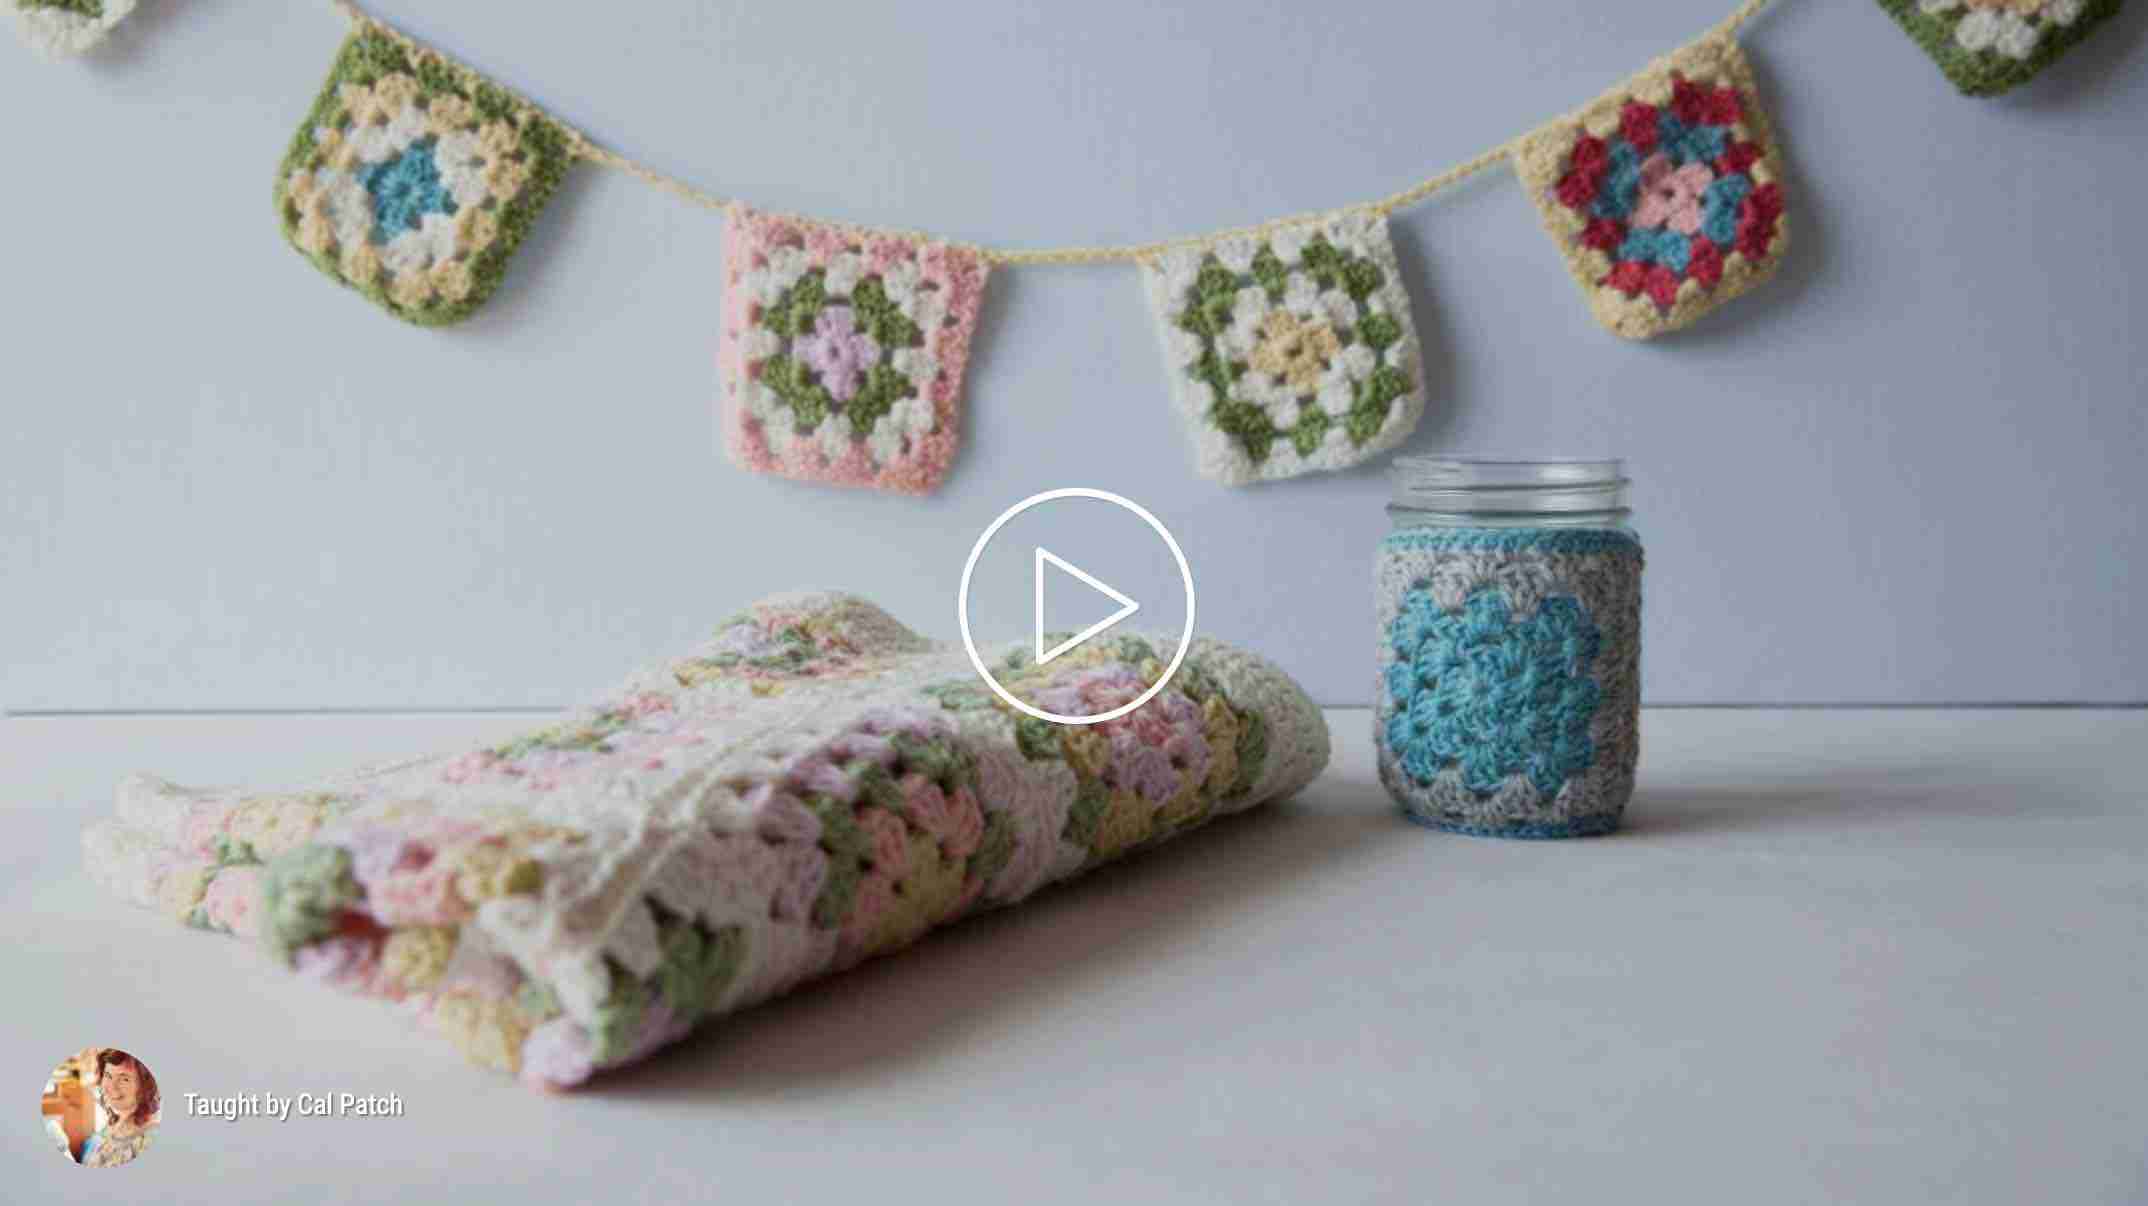 gaga for granny squares creativebug start crochet